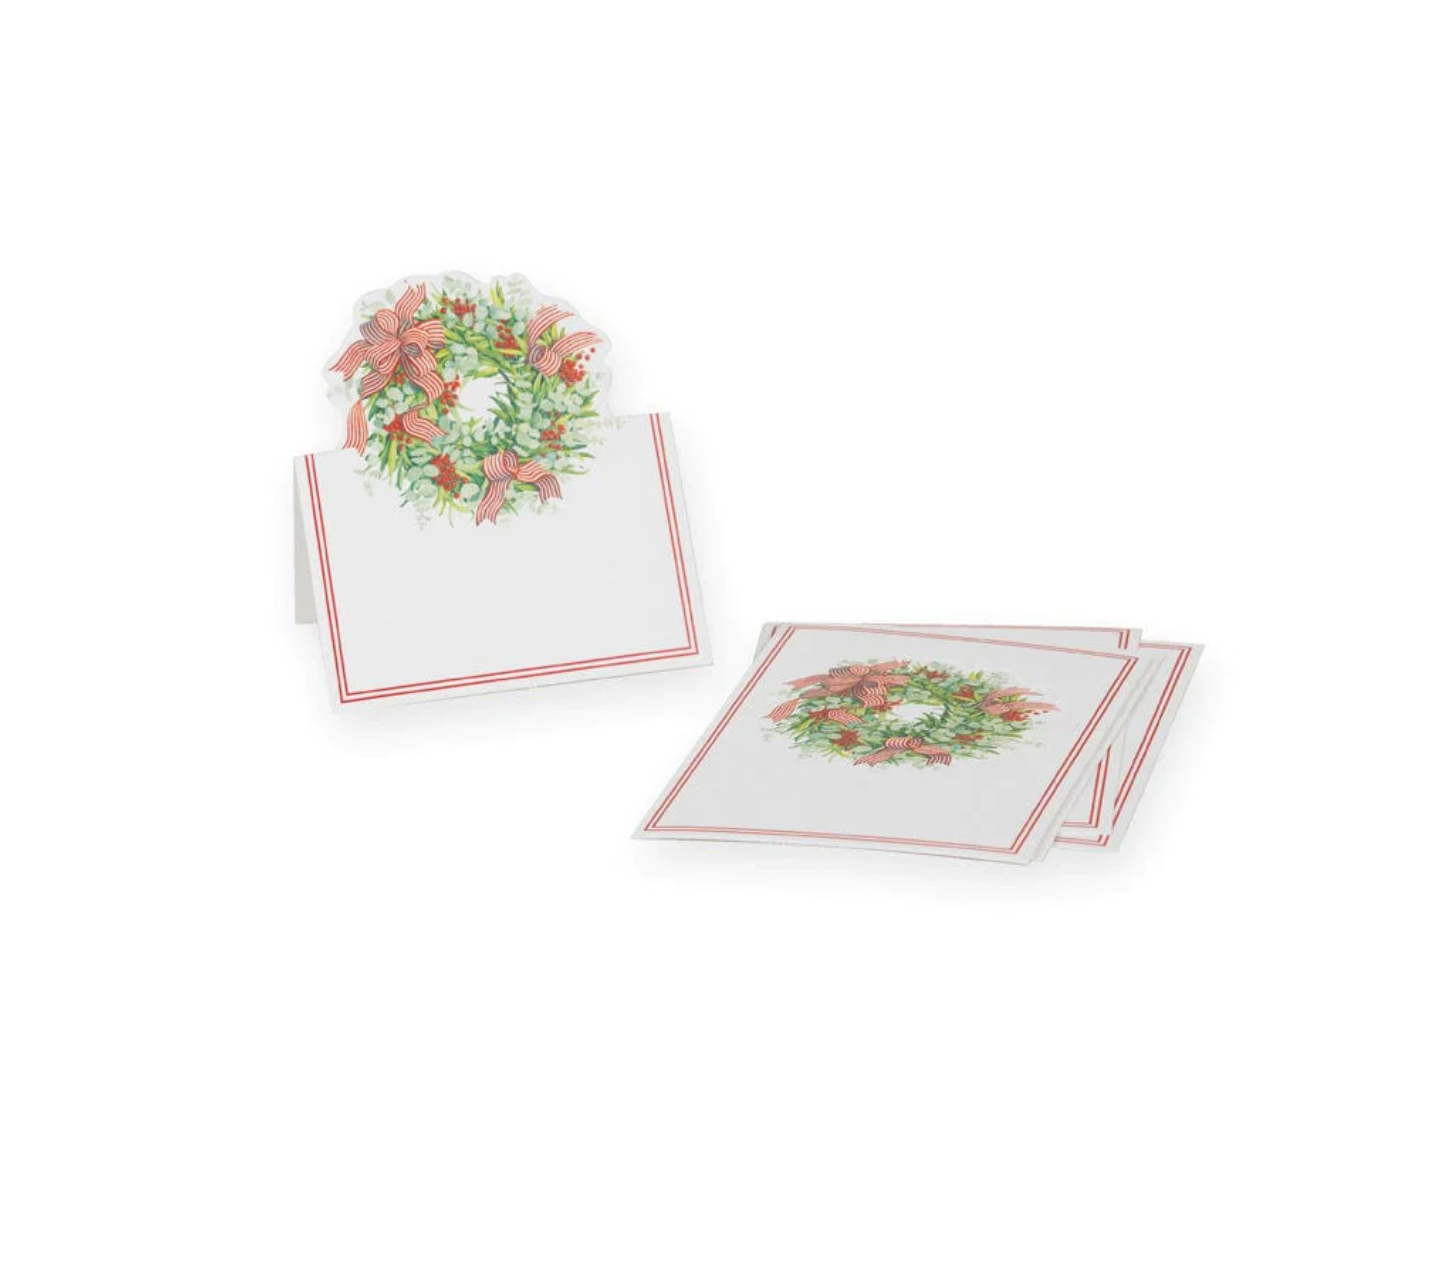 Ribbon Stripe Wreath Die-Cut Place Cards - 8 Per Package